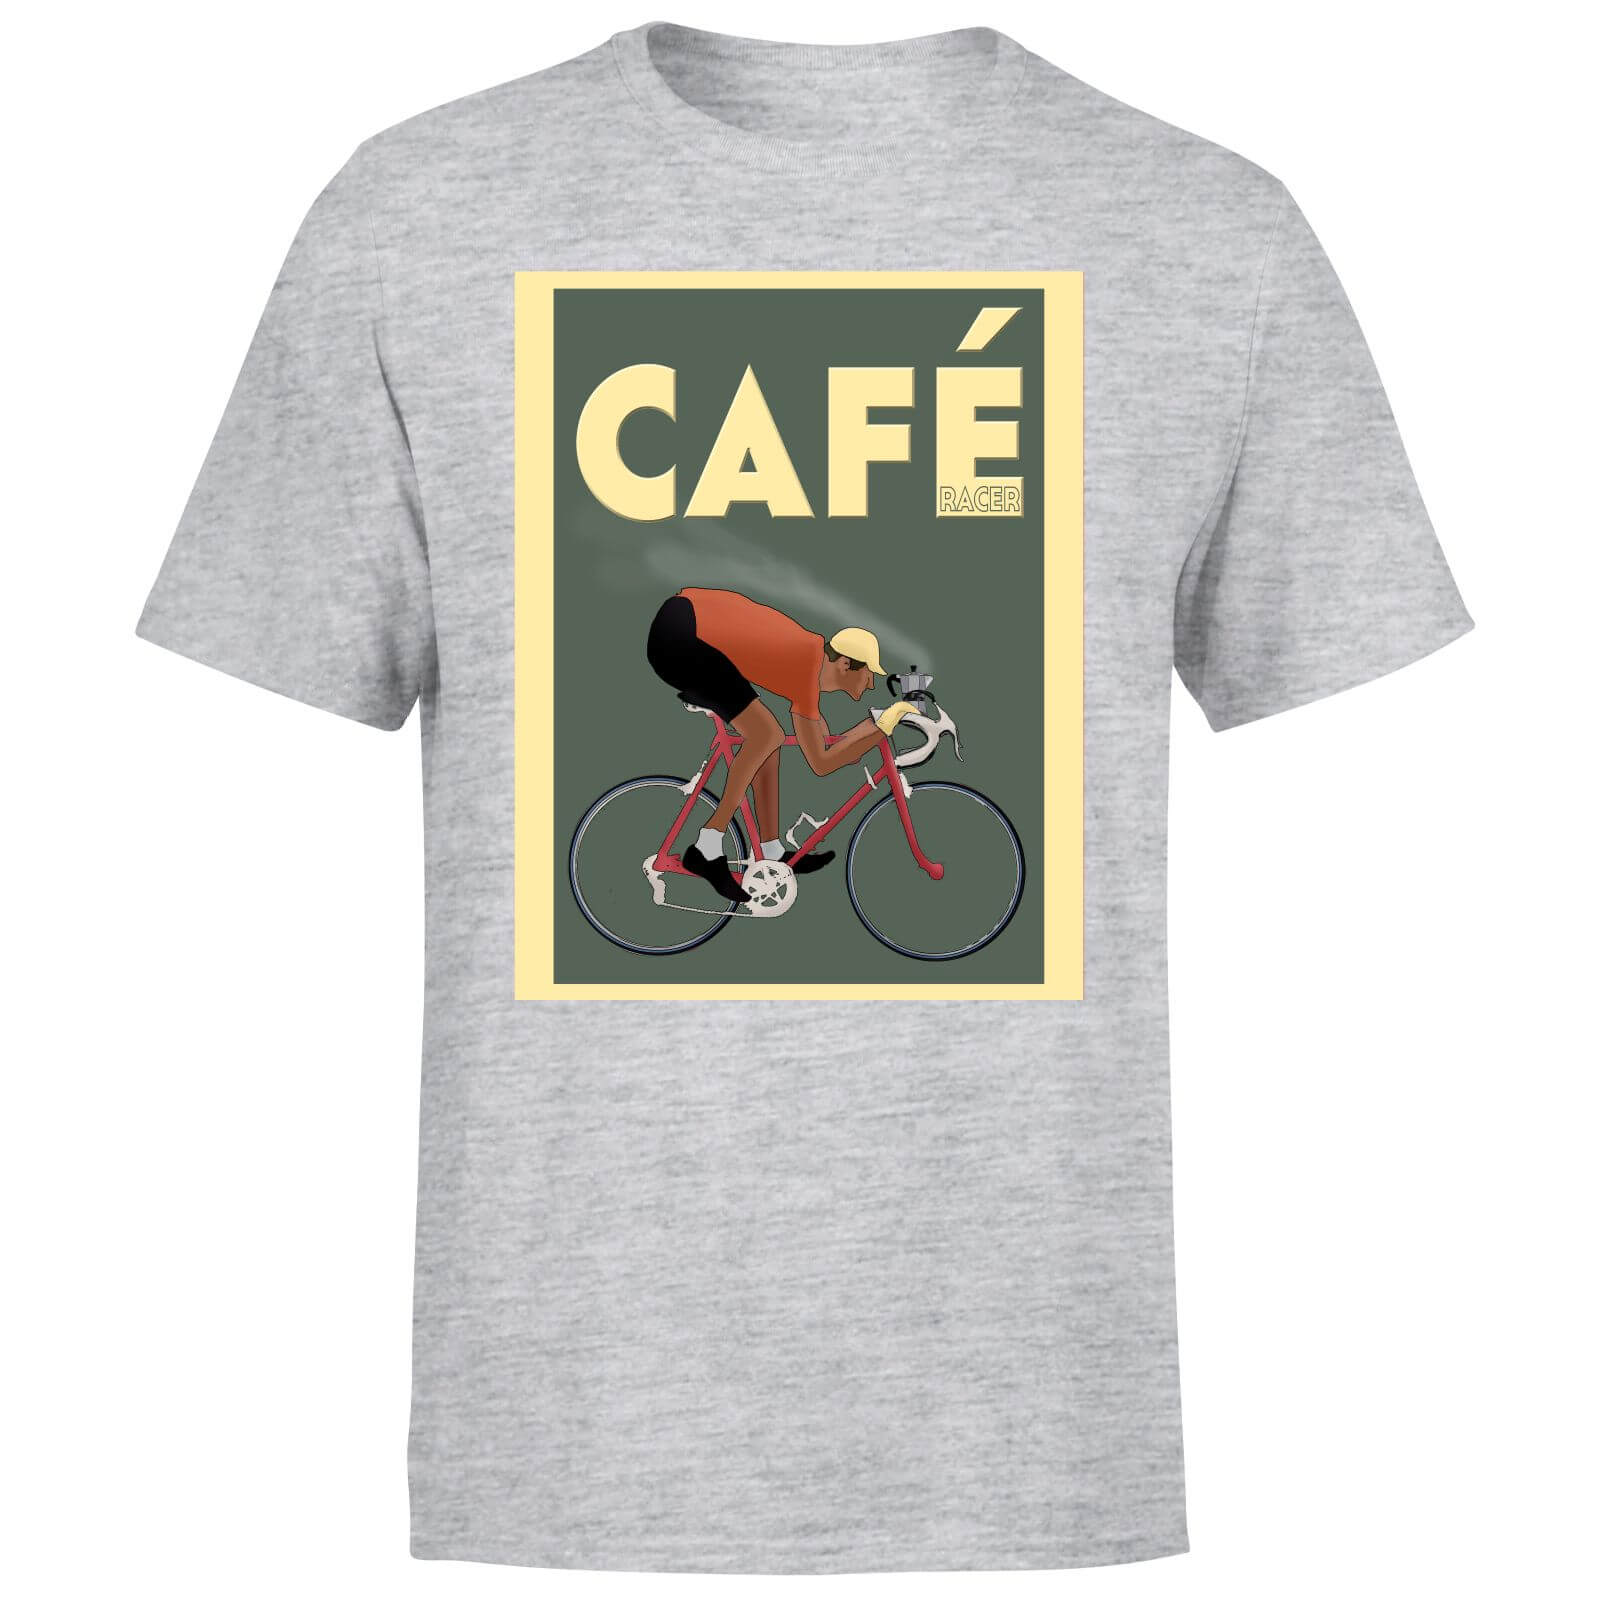 Cafe Racer Men's T-Shirt - Grey - L - Grey